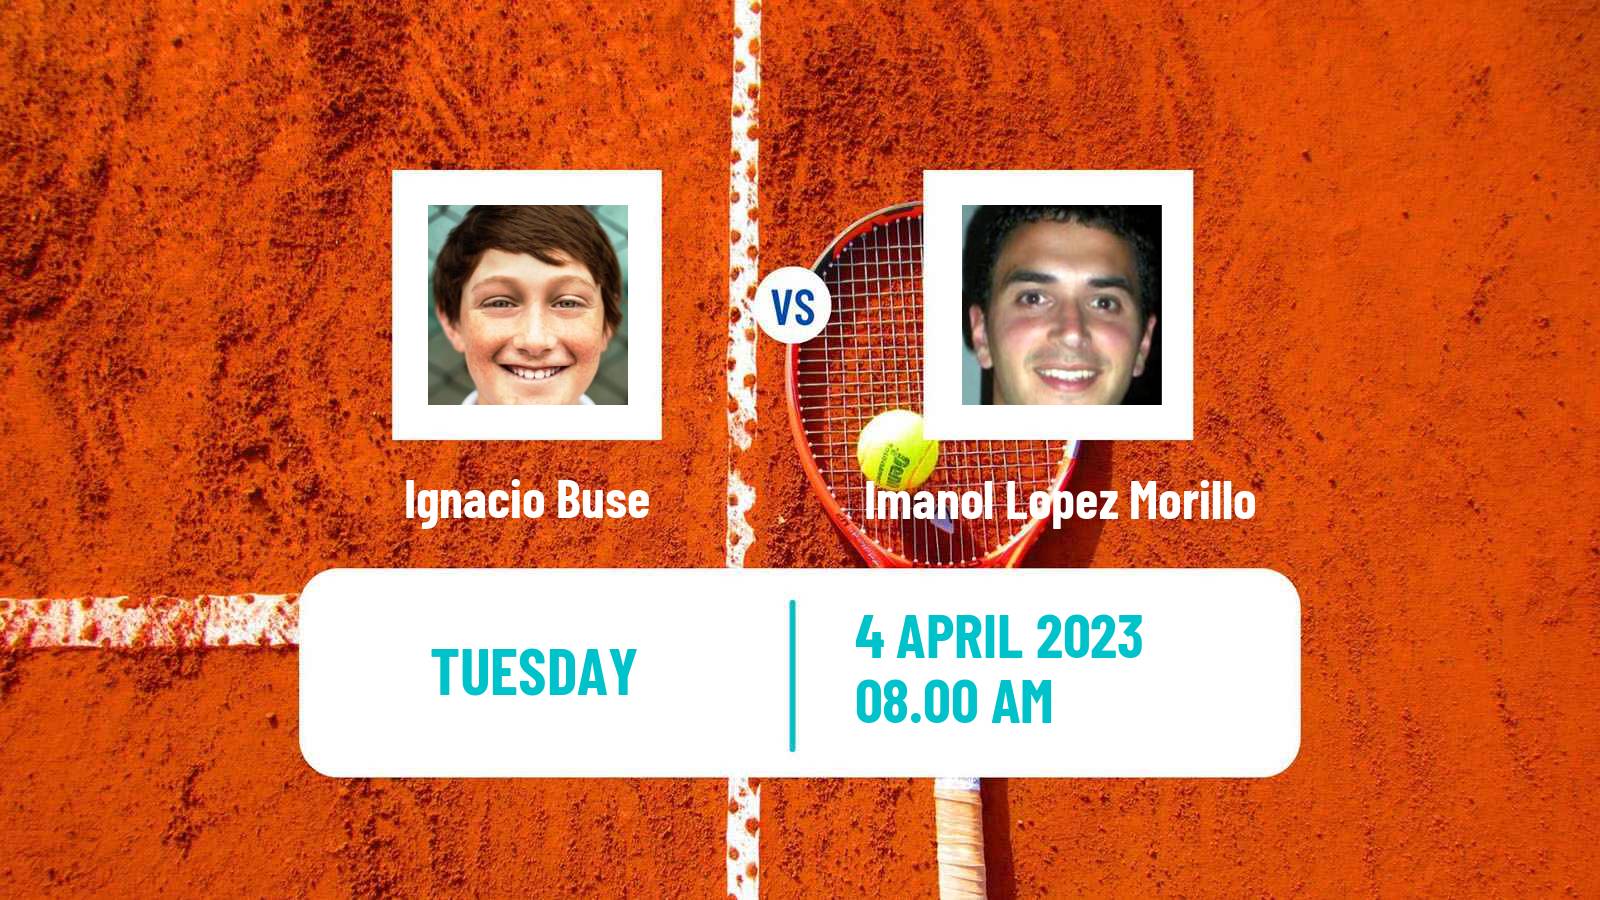 Tennis ITF Tournaments Ignacio Buse - Imanol Lopez Morillo